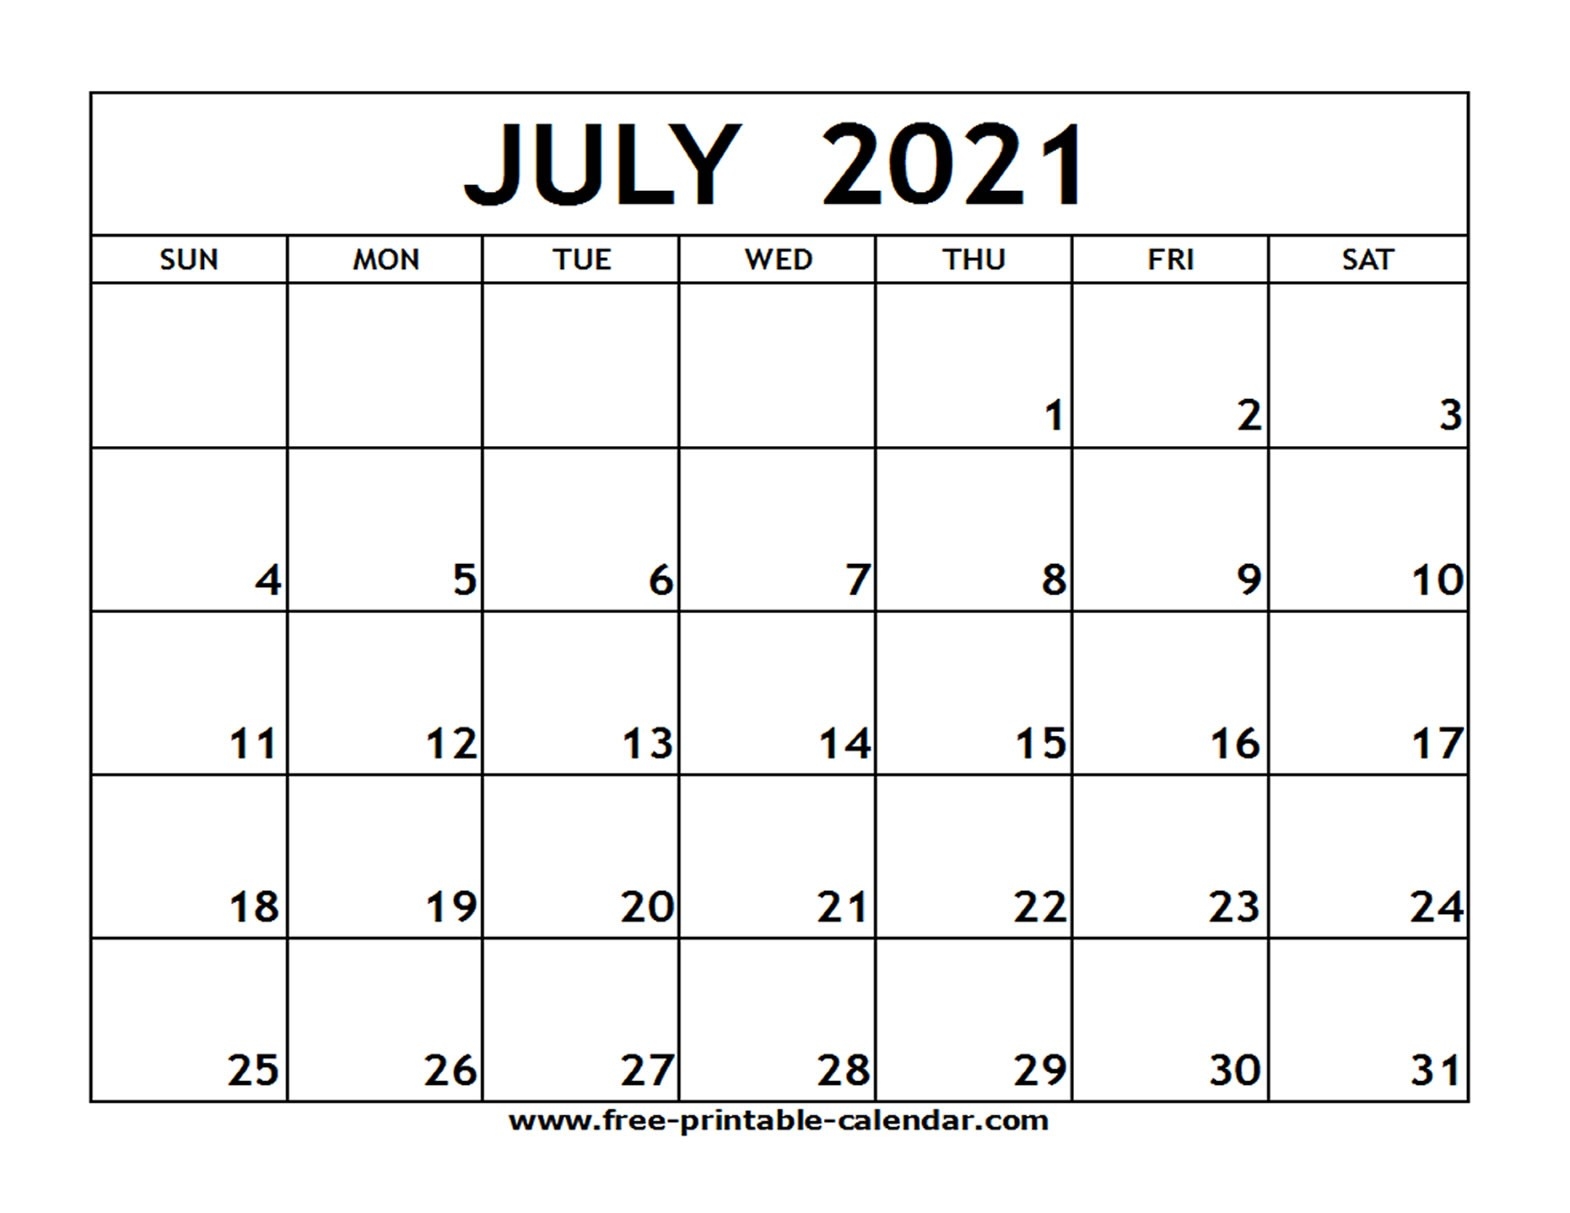 July 2021 Printable Calendar - Free-Printable-Calendar-Printable Calendar July 2021 And August 2021